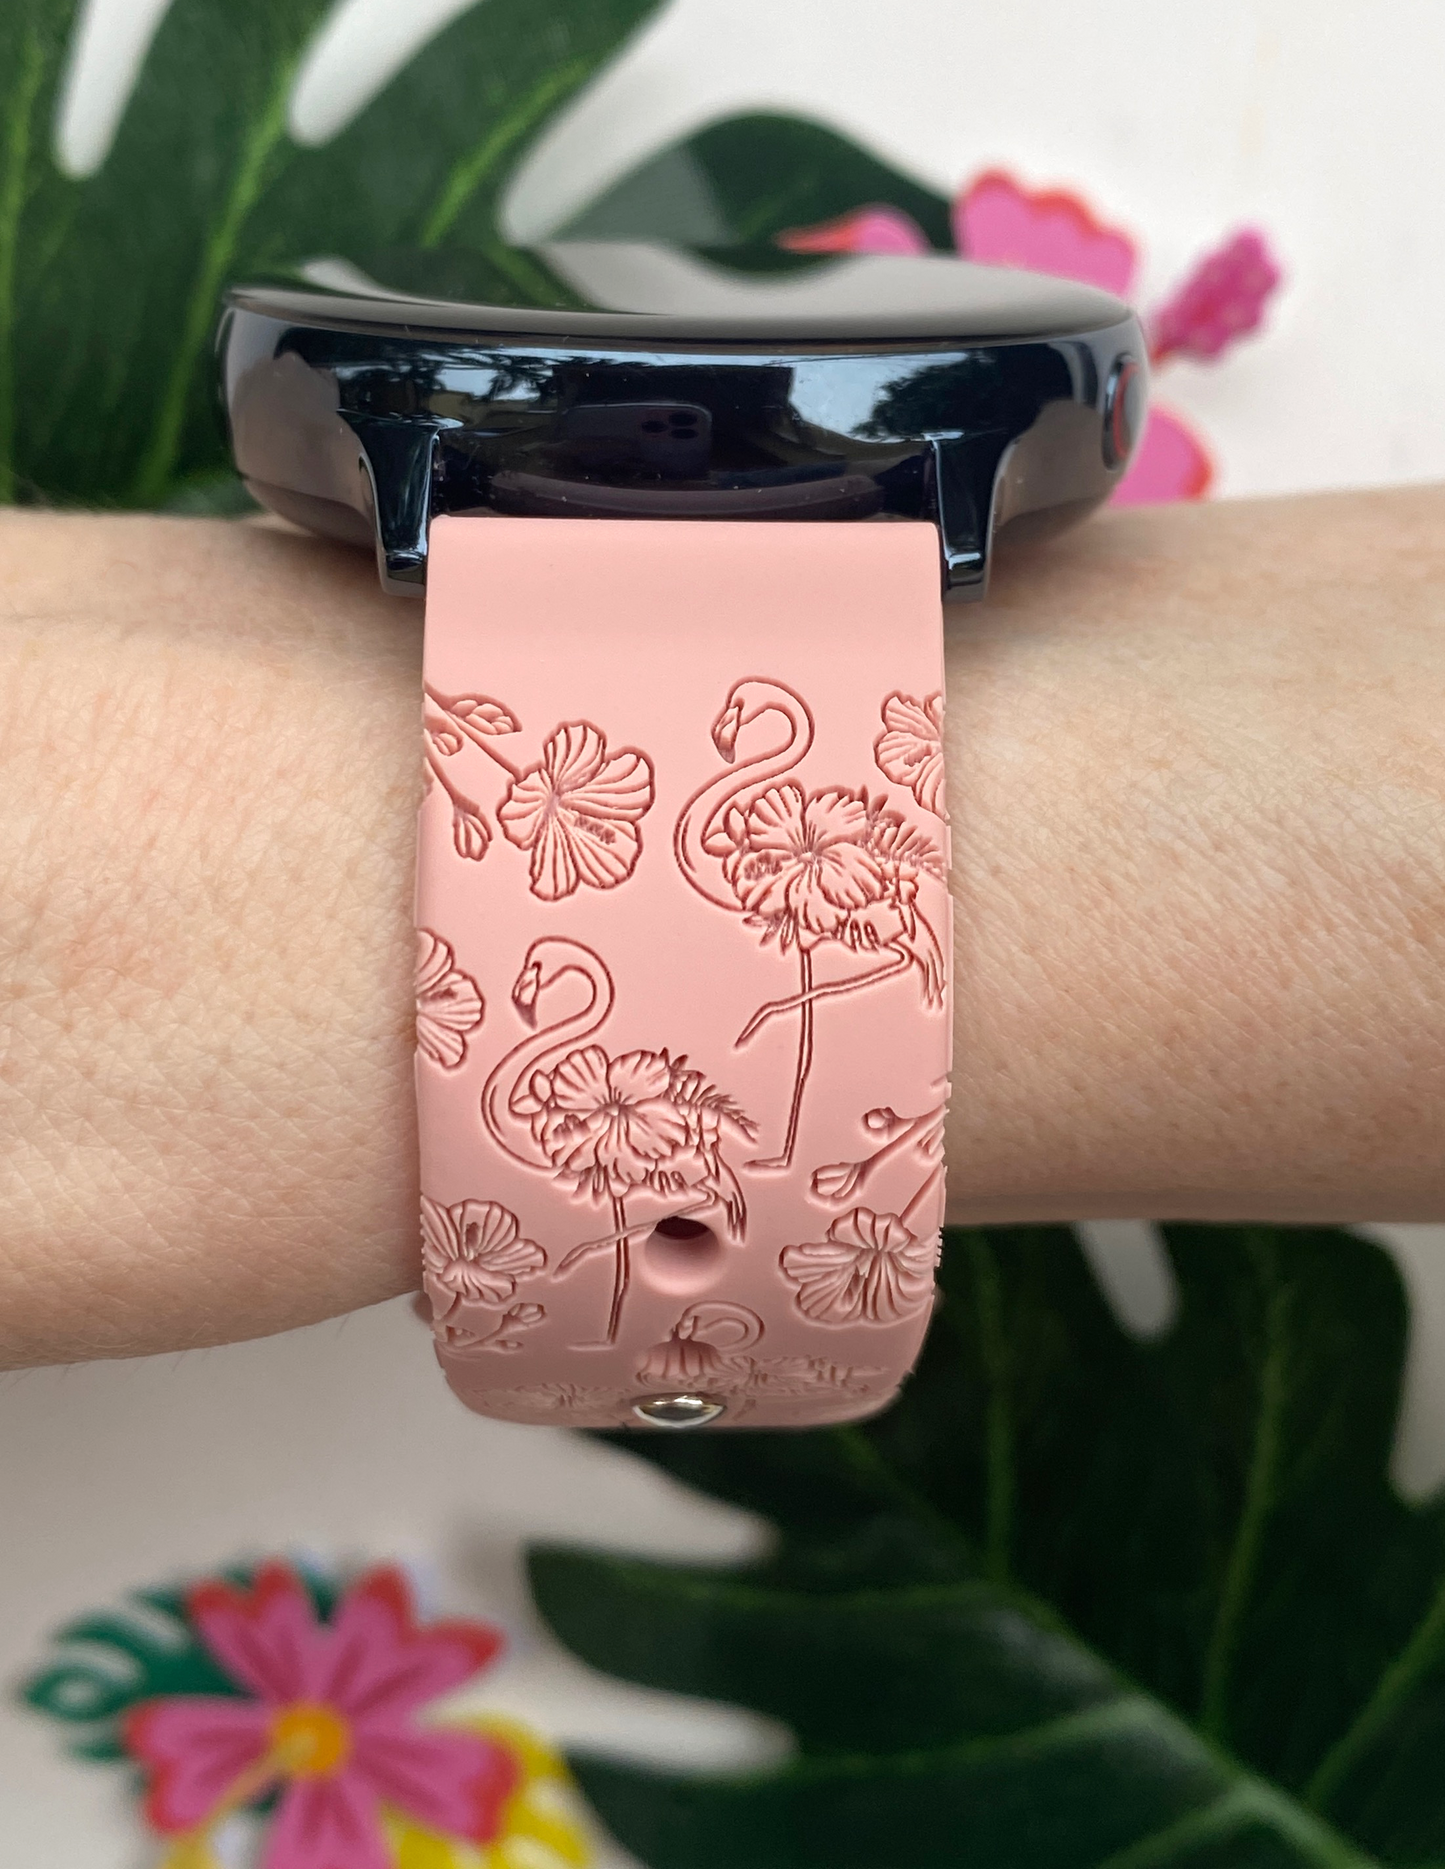 Flamingo Lover 20mm Samsung Galaxy Watch Band